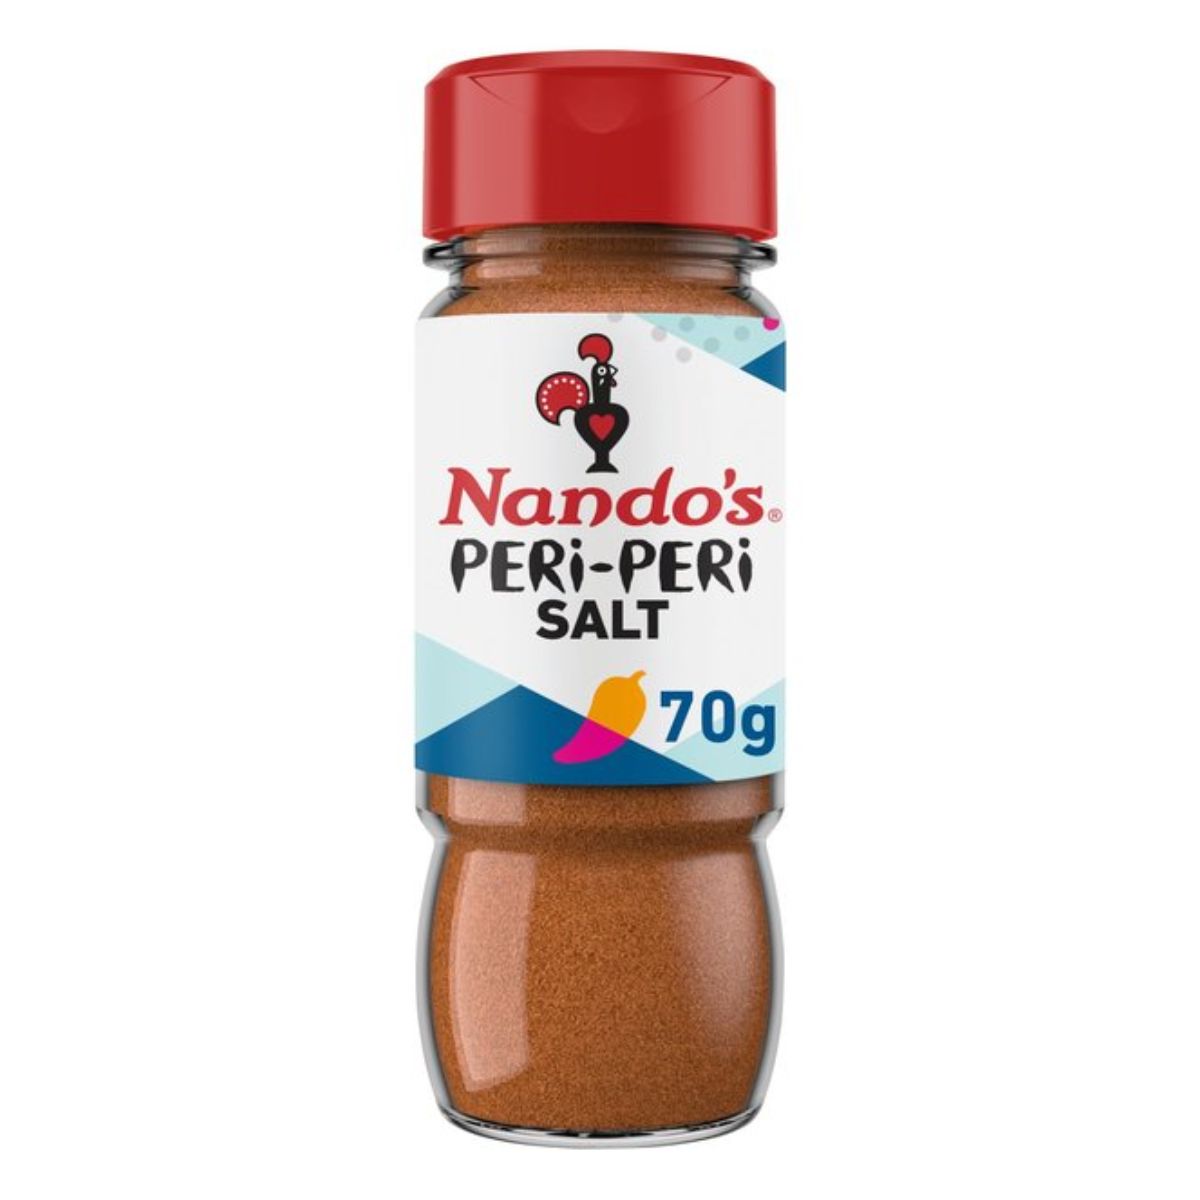 Nandos - Peri Peri Salt - 70g.